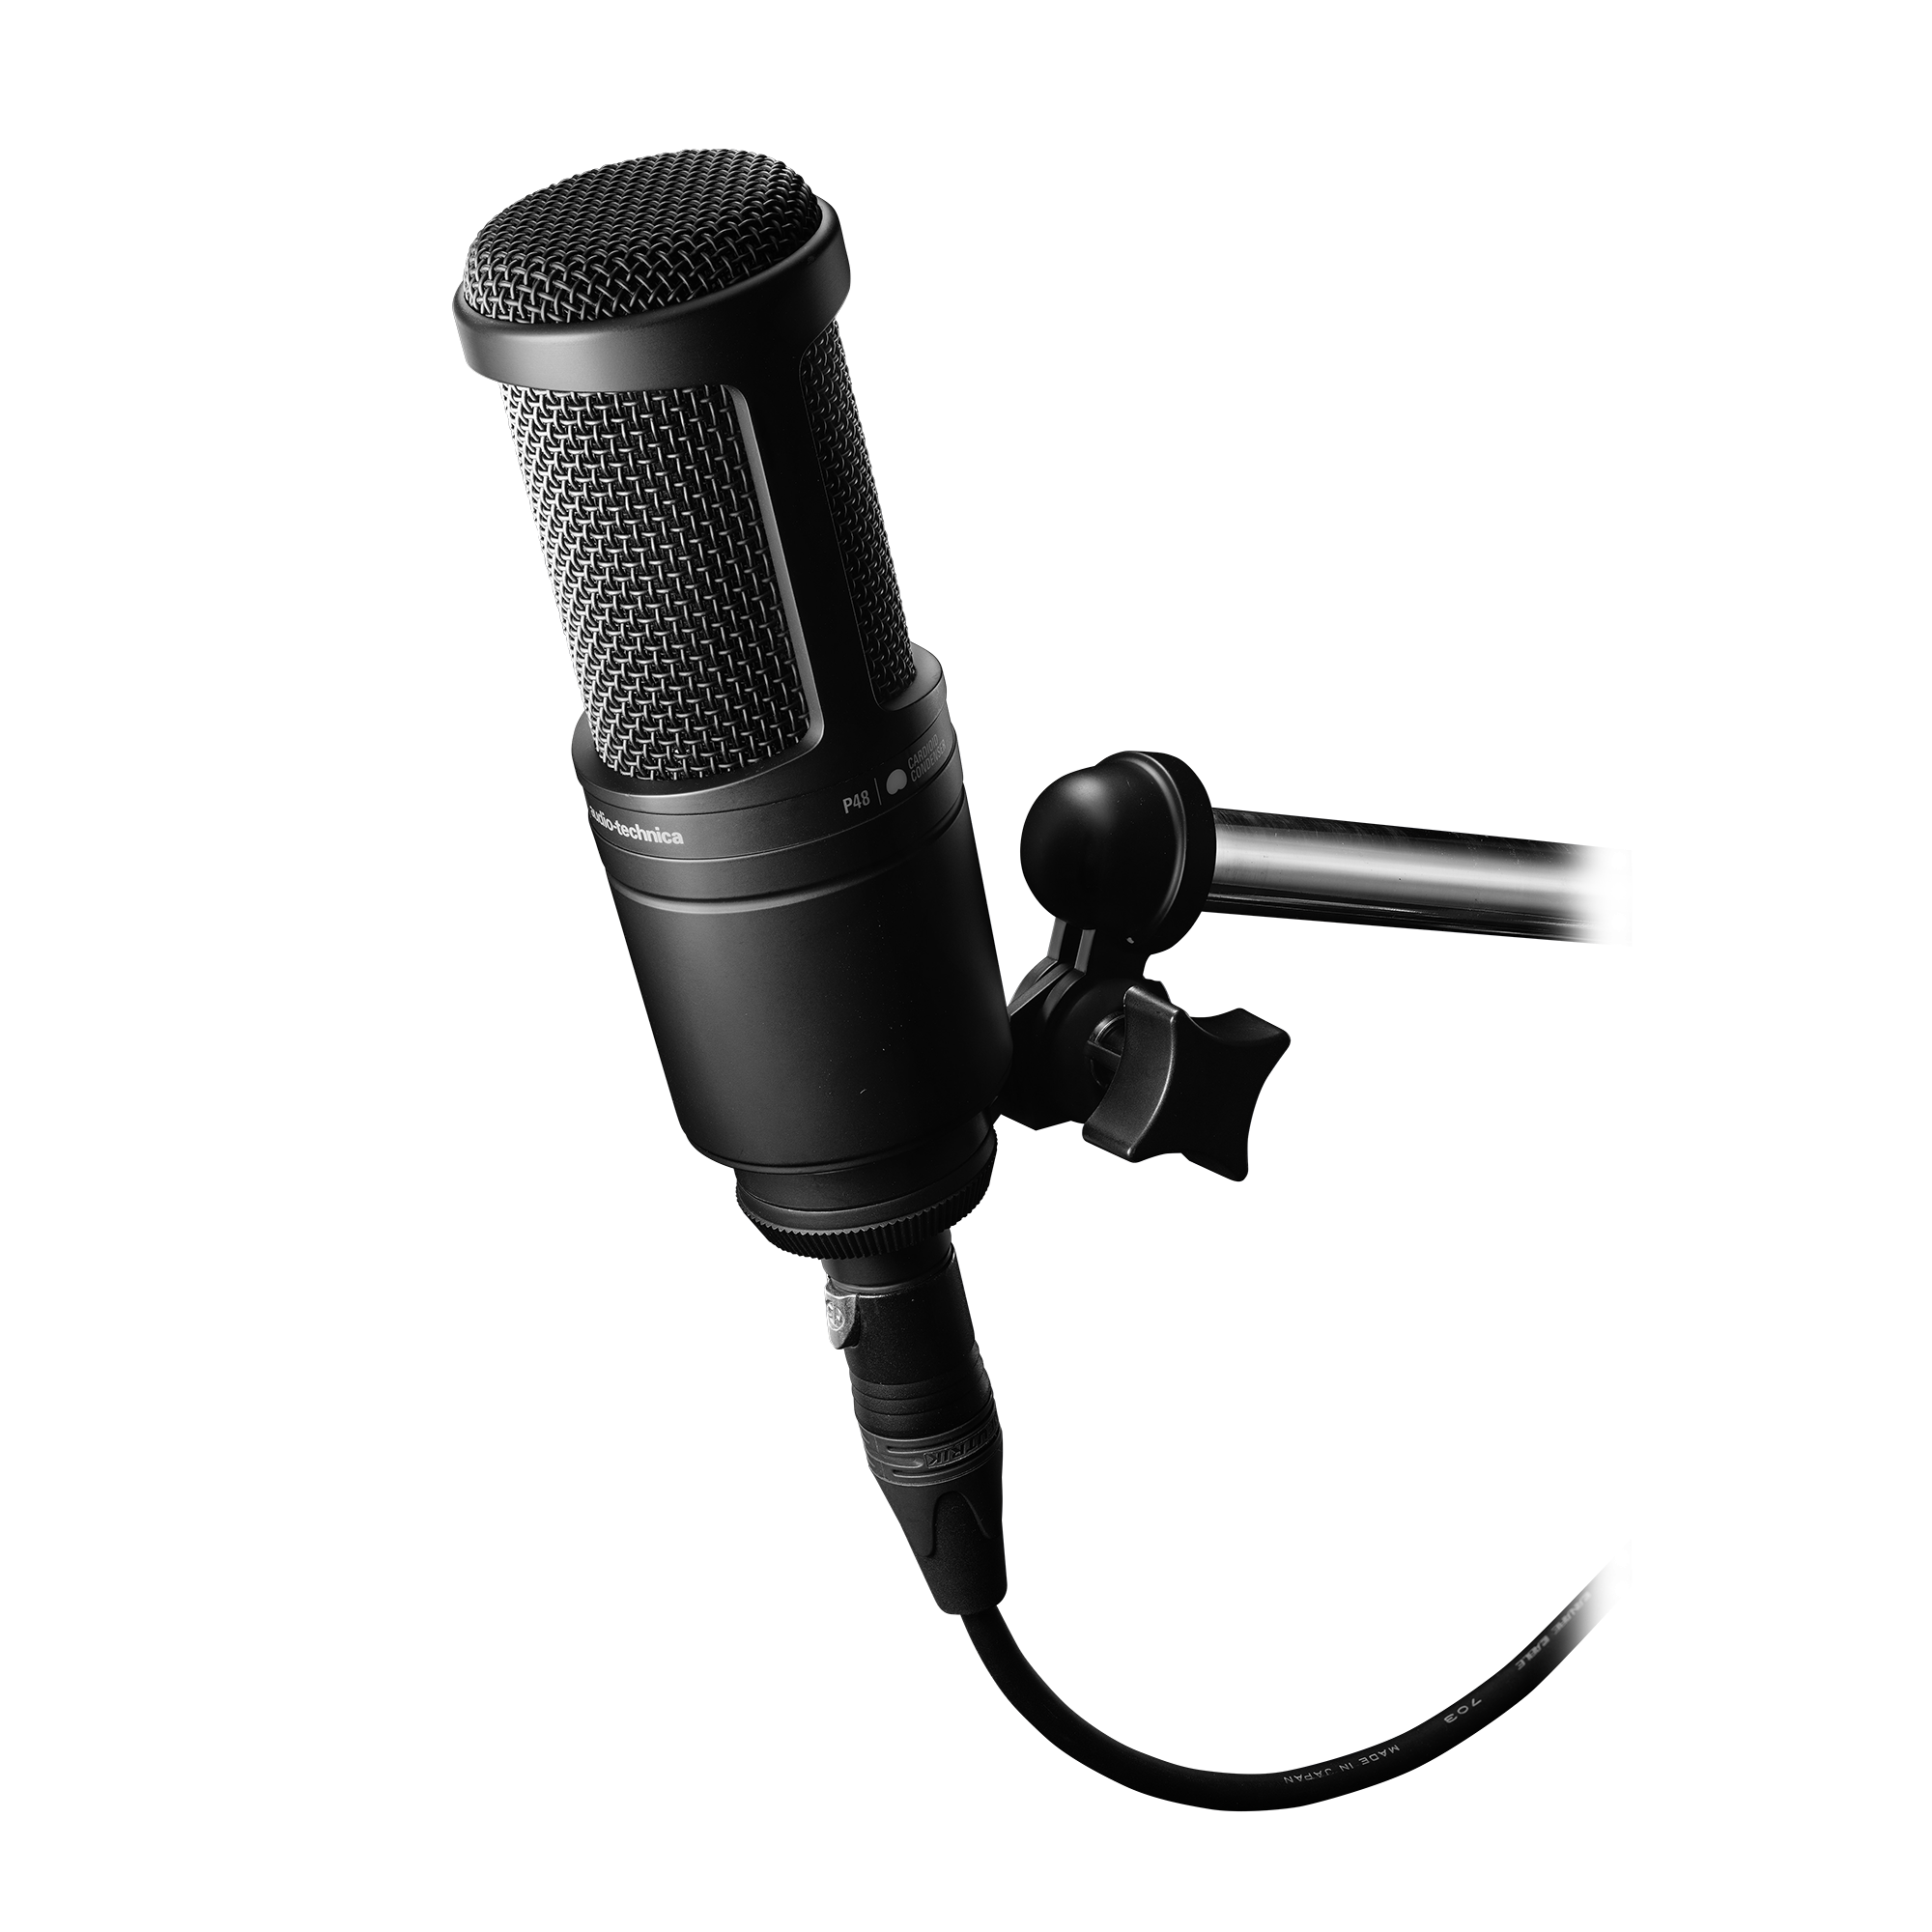 Audio Technica AT2020 - Cardioid Condenser Microphone